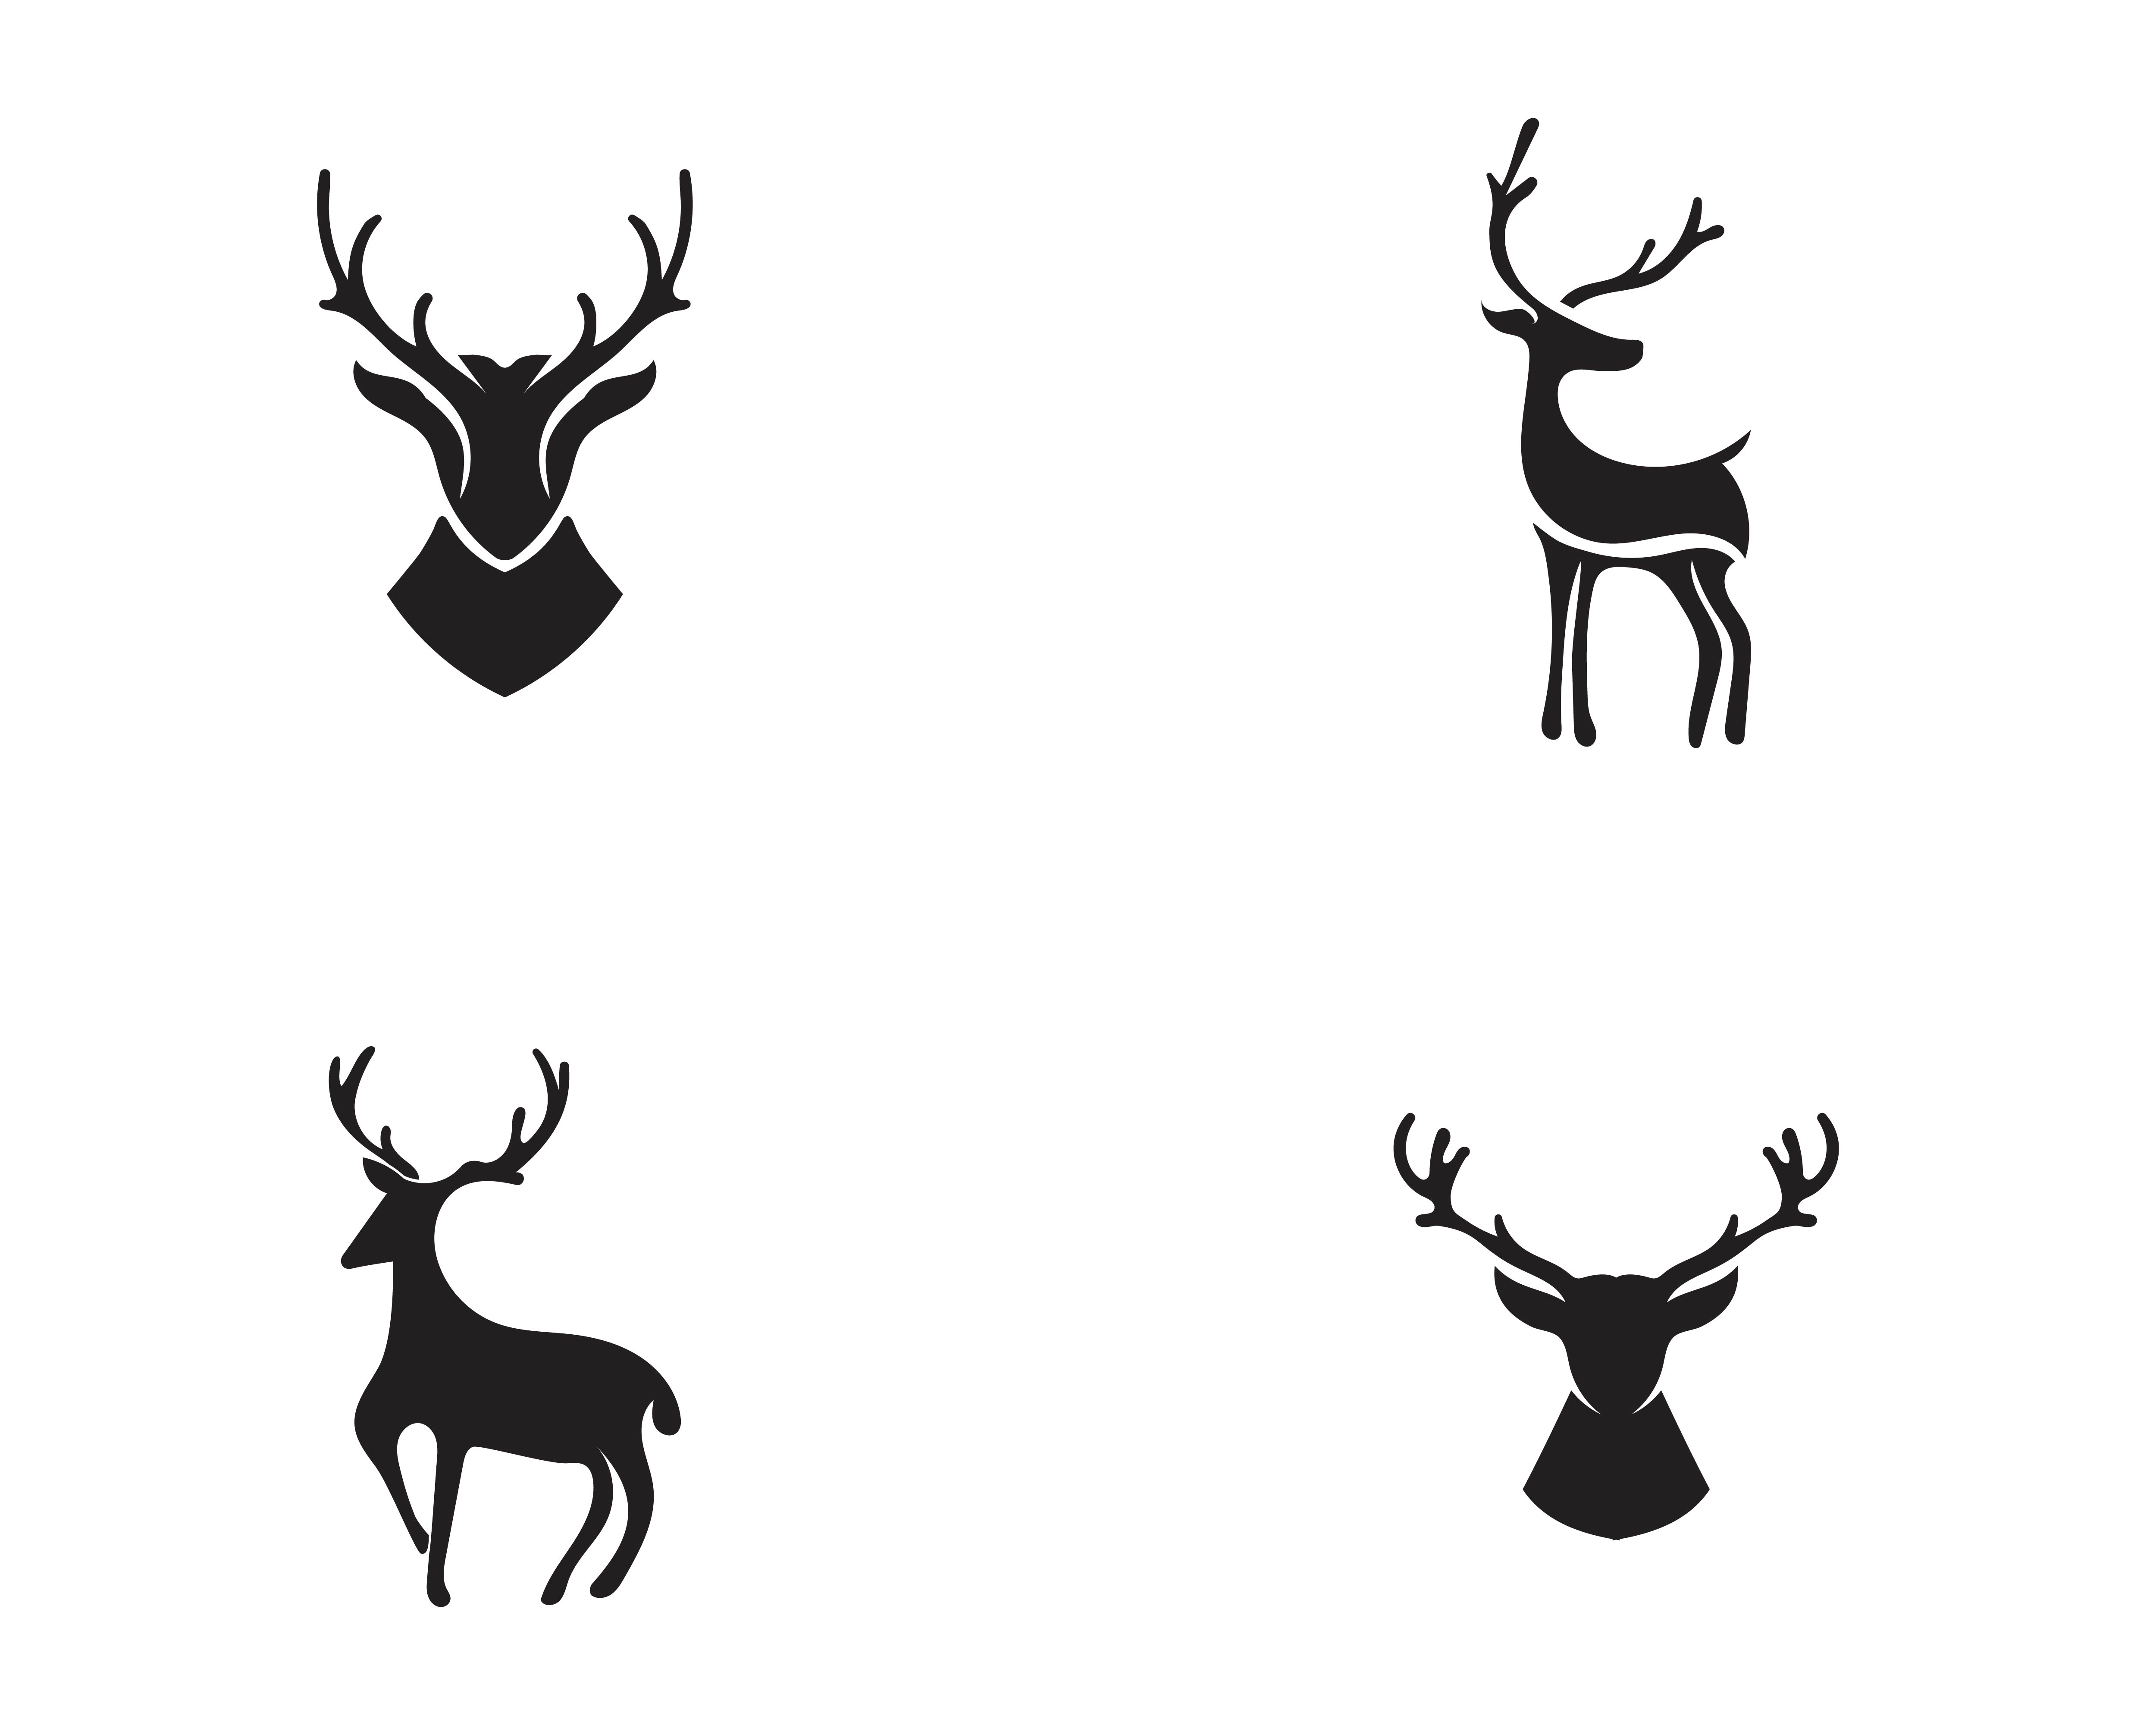 Download Deer Head Silhouette Free Vector Art - (269 Free Downloads)